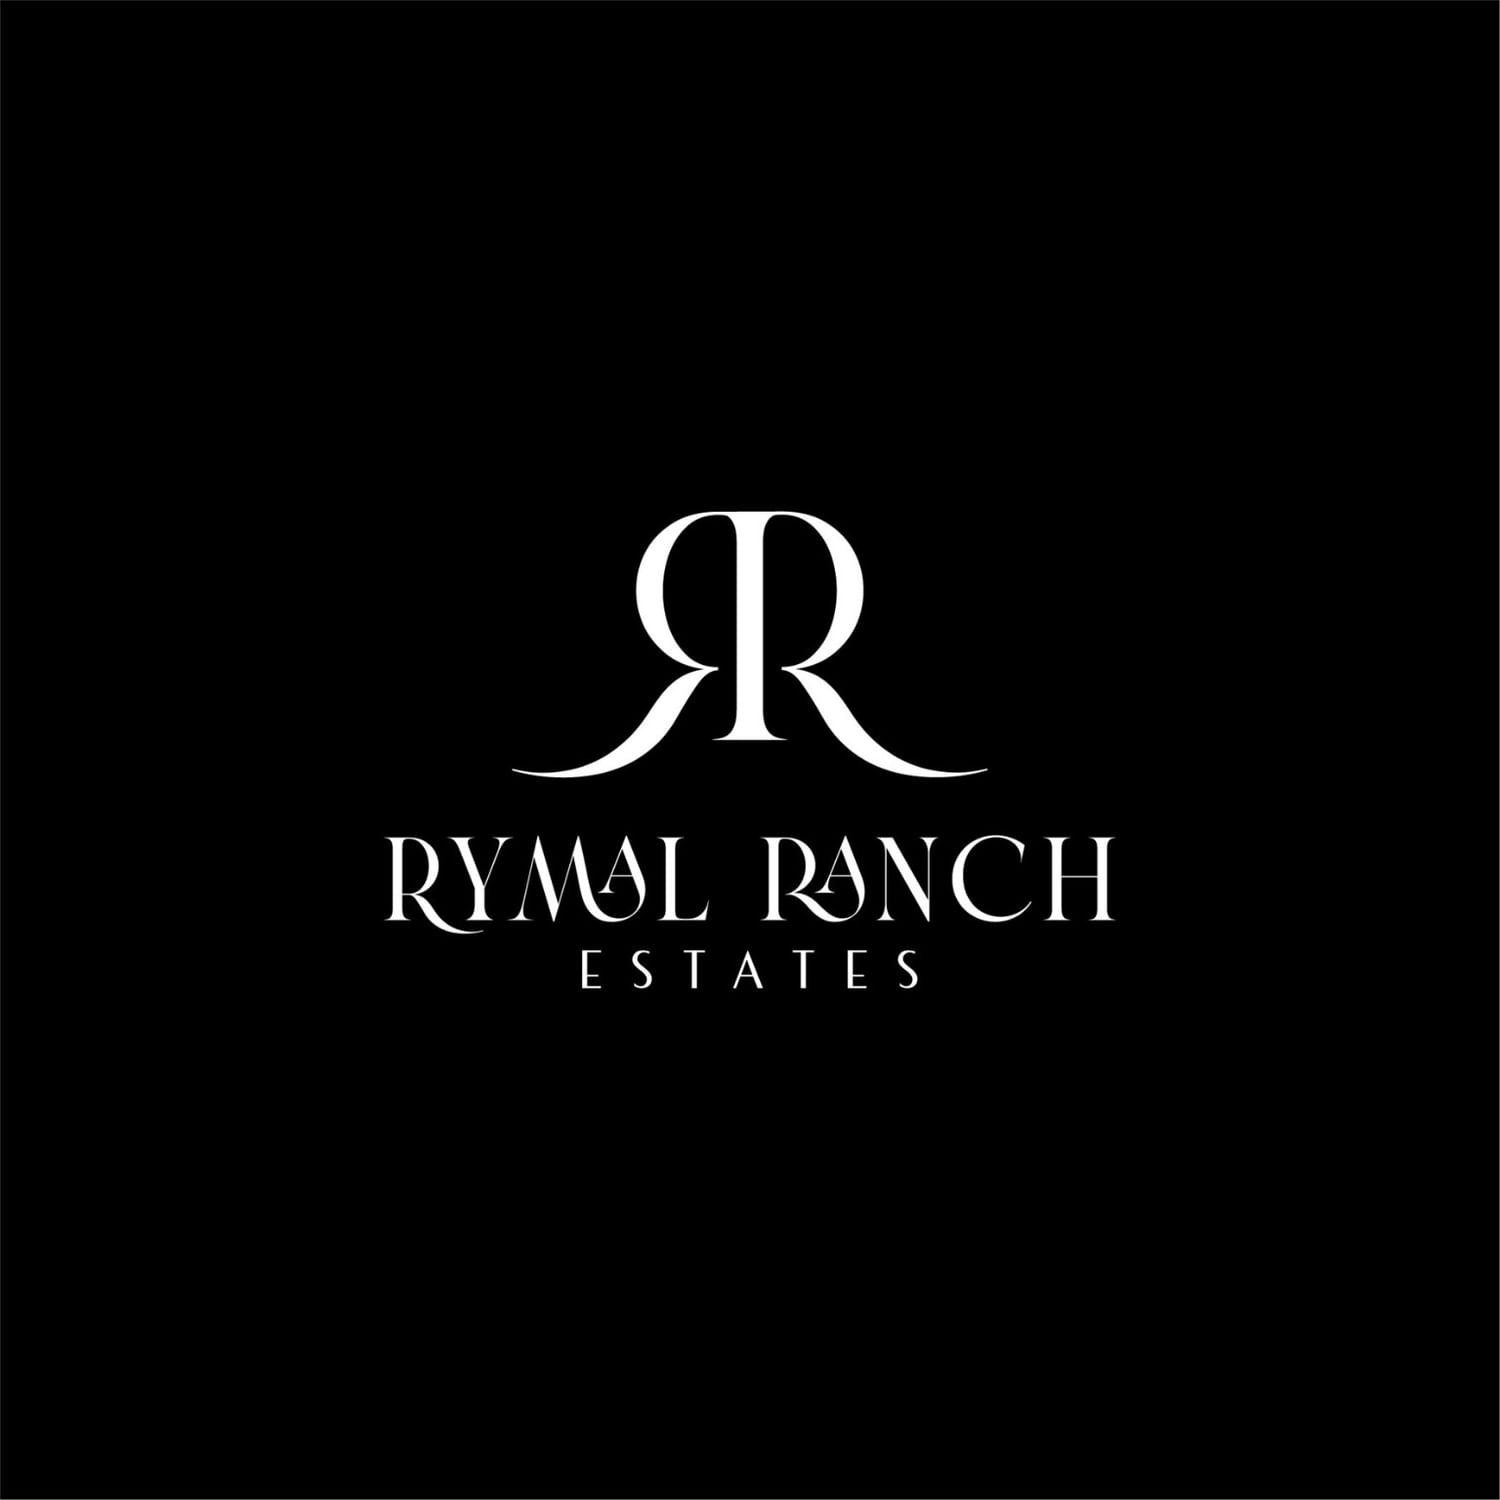 Real estate property located at 00 Rymal Ranch Road, Galveston, Rymal Ranch Estates, Algoa, TX, US